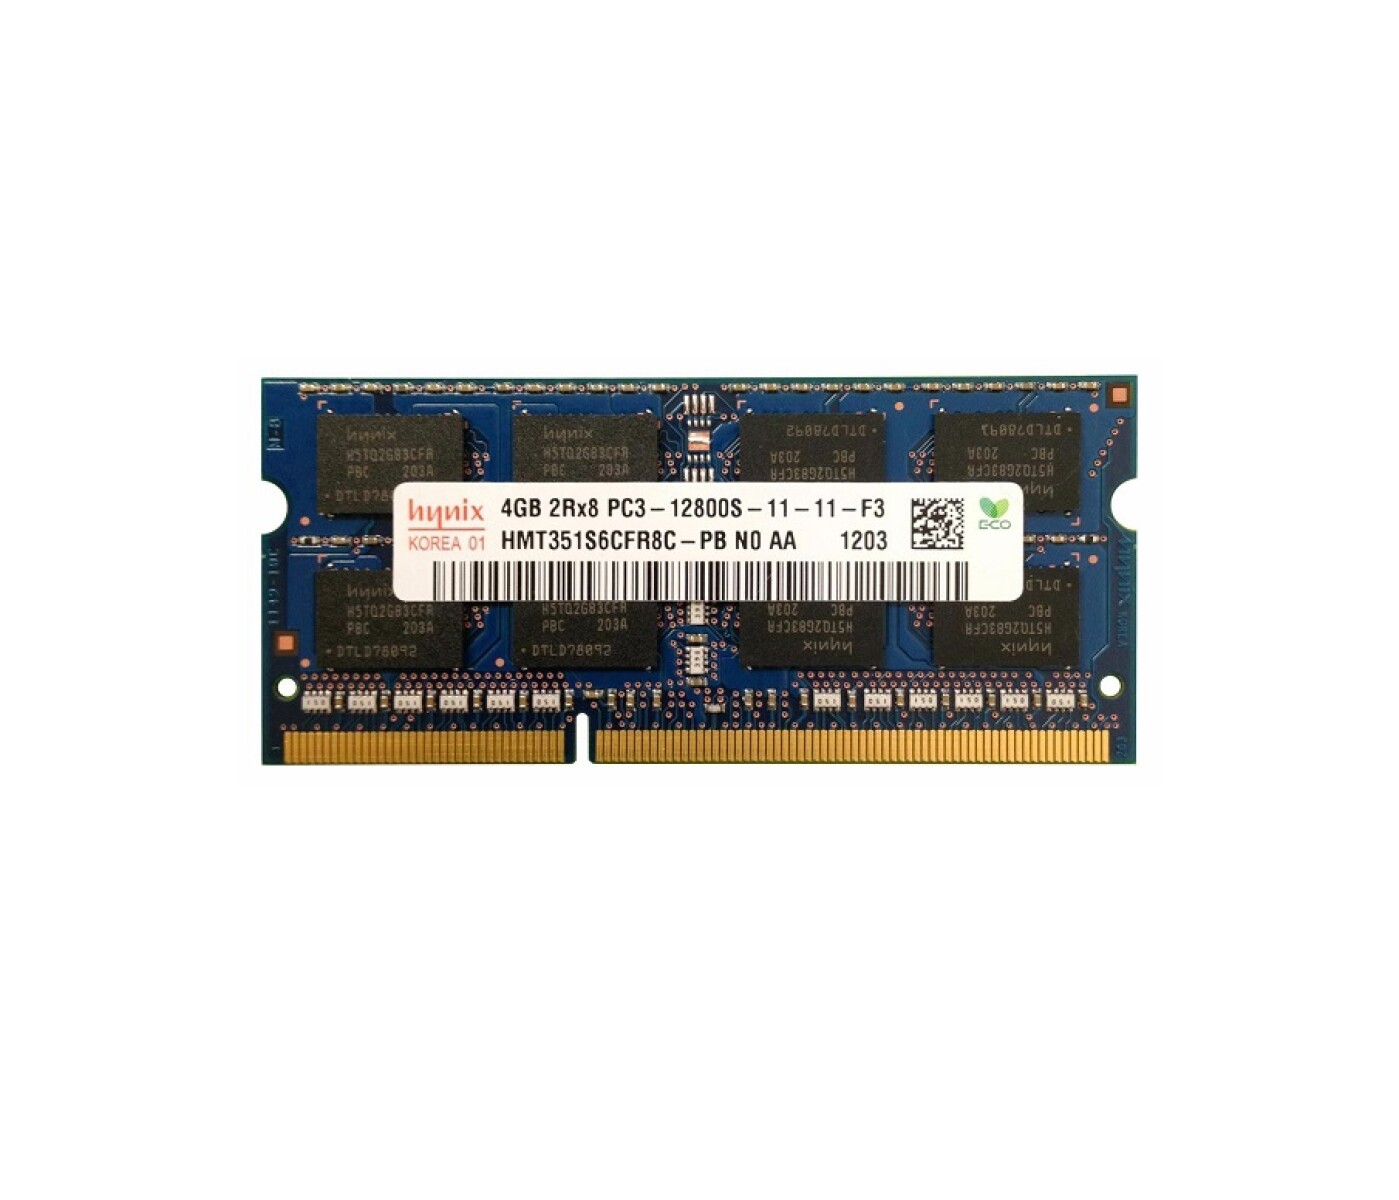 Memoria Kingston DDR3L 1600MHZ 8GB Sodimm - 001 